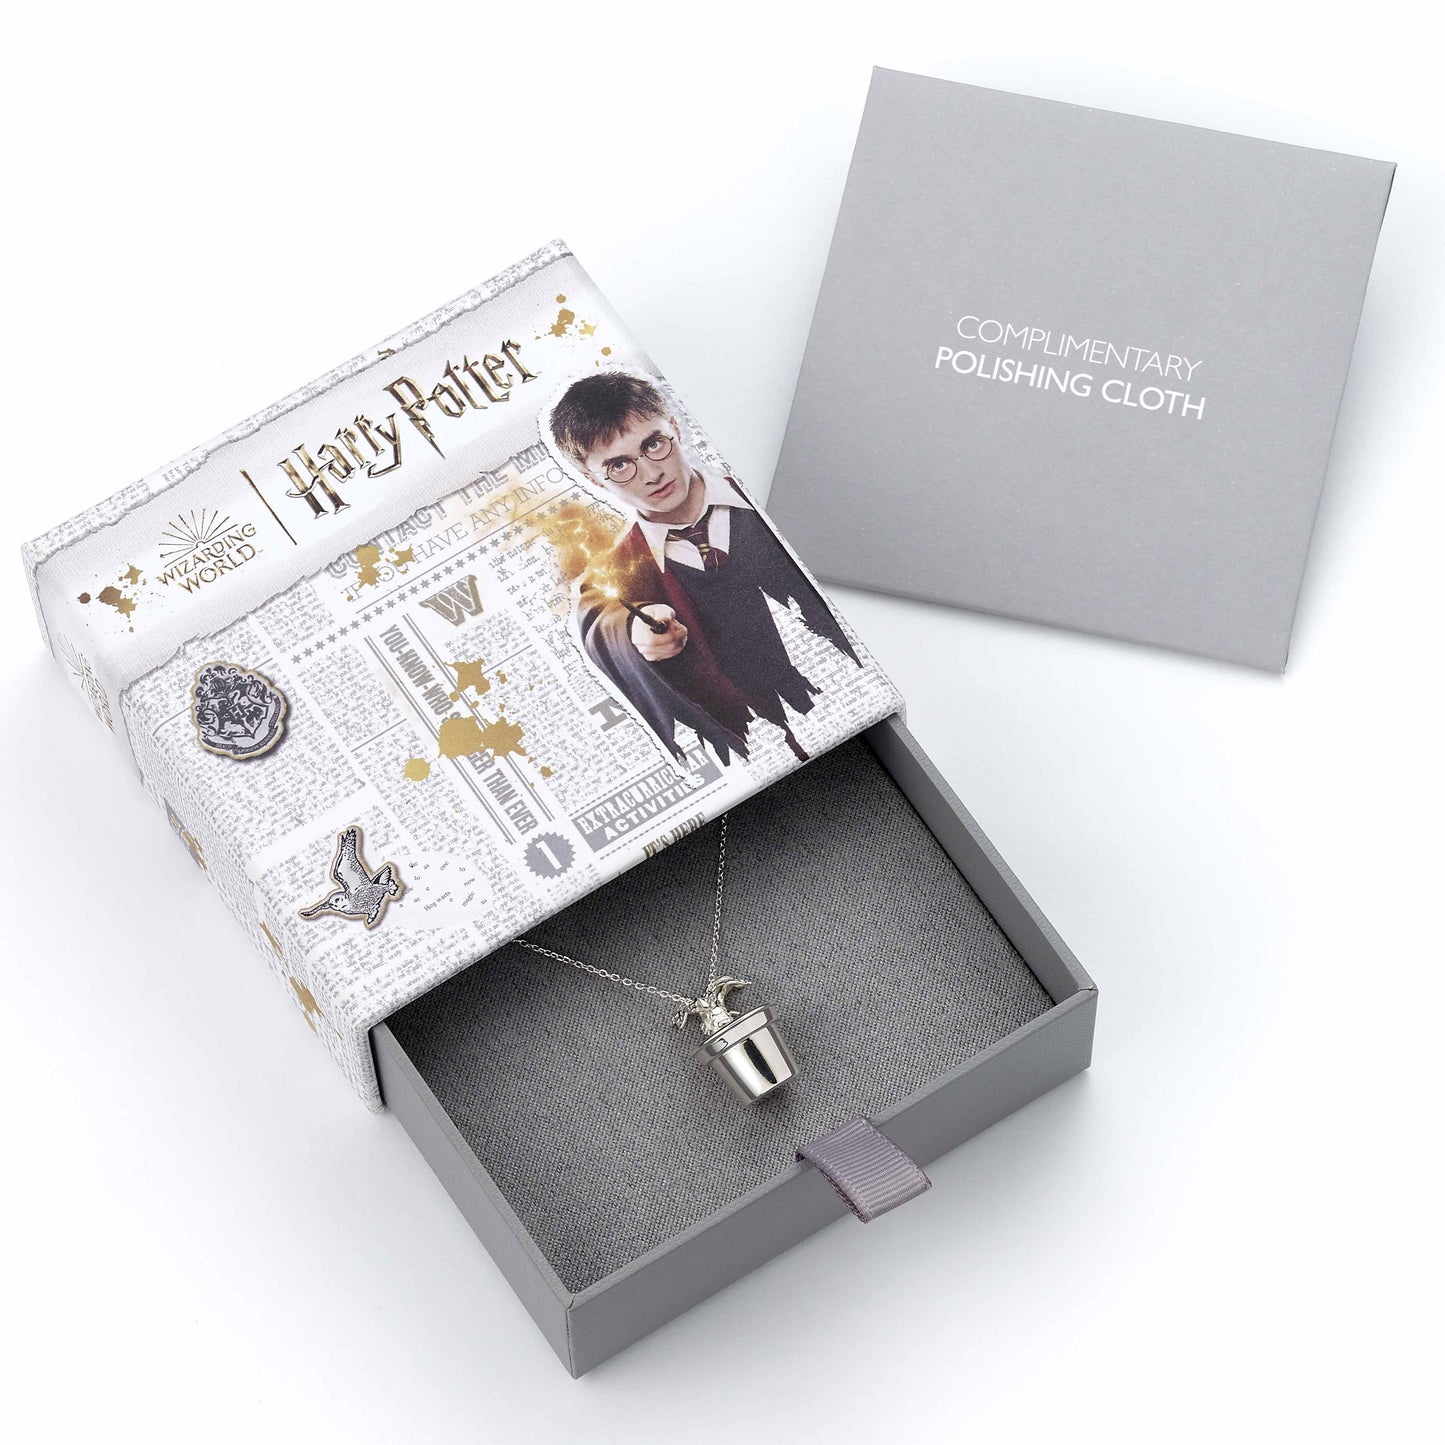 Harry Potter Sterling Silver Mandrake Charm Necklace - Silver